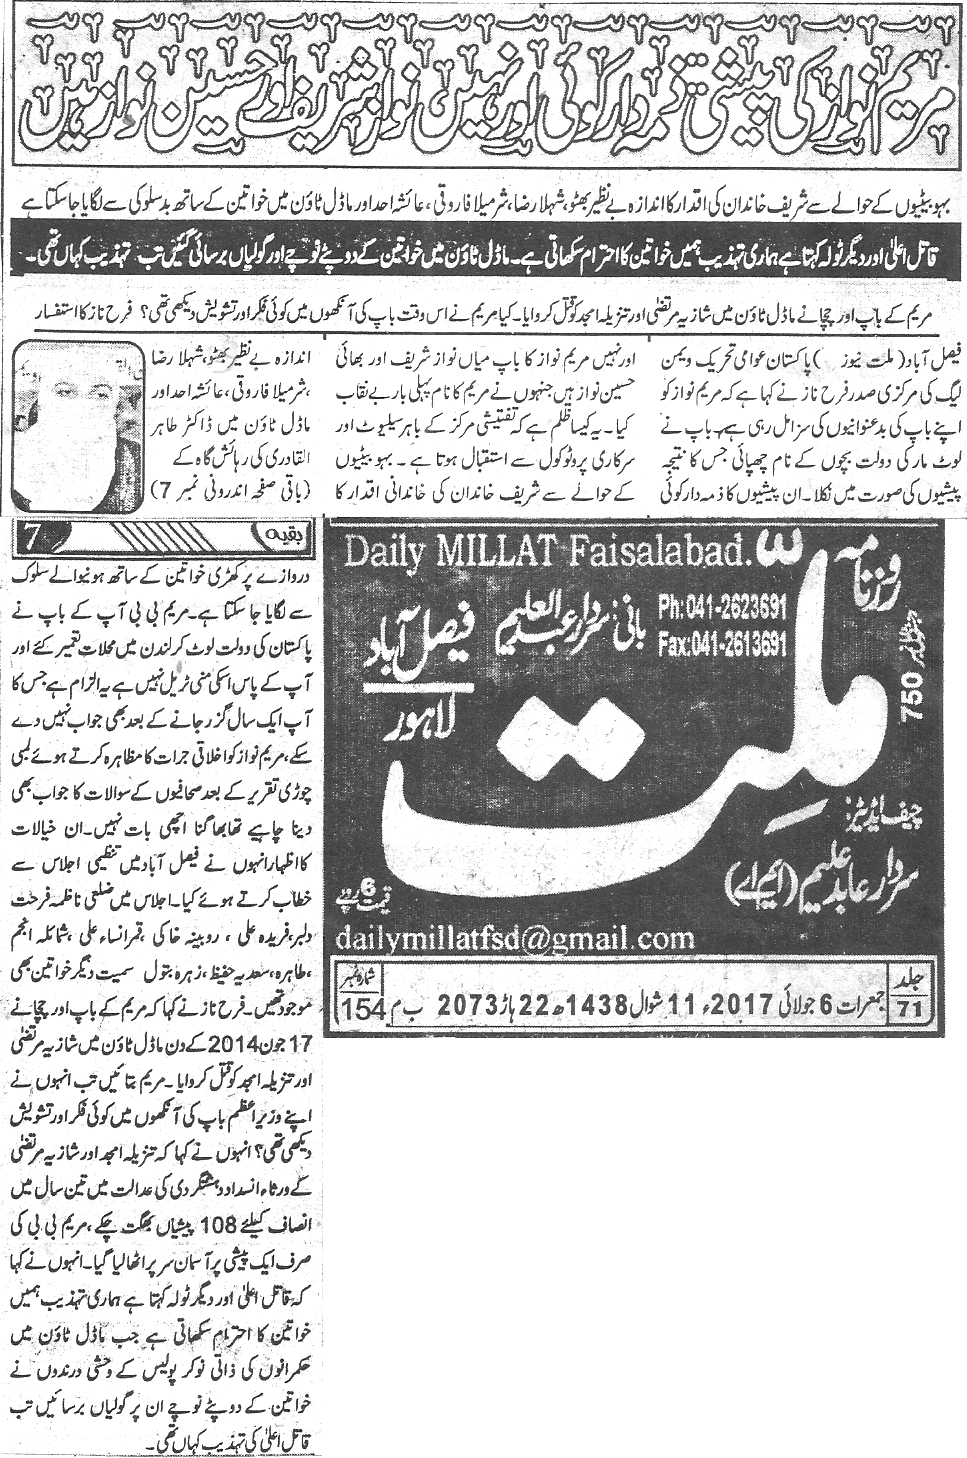 Minhaj-ul-Quran  Print Media Coverage Daily Millat Back page copy